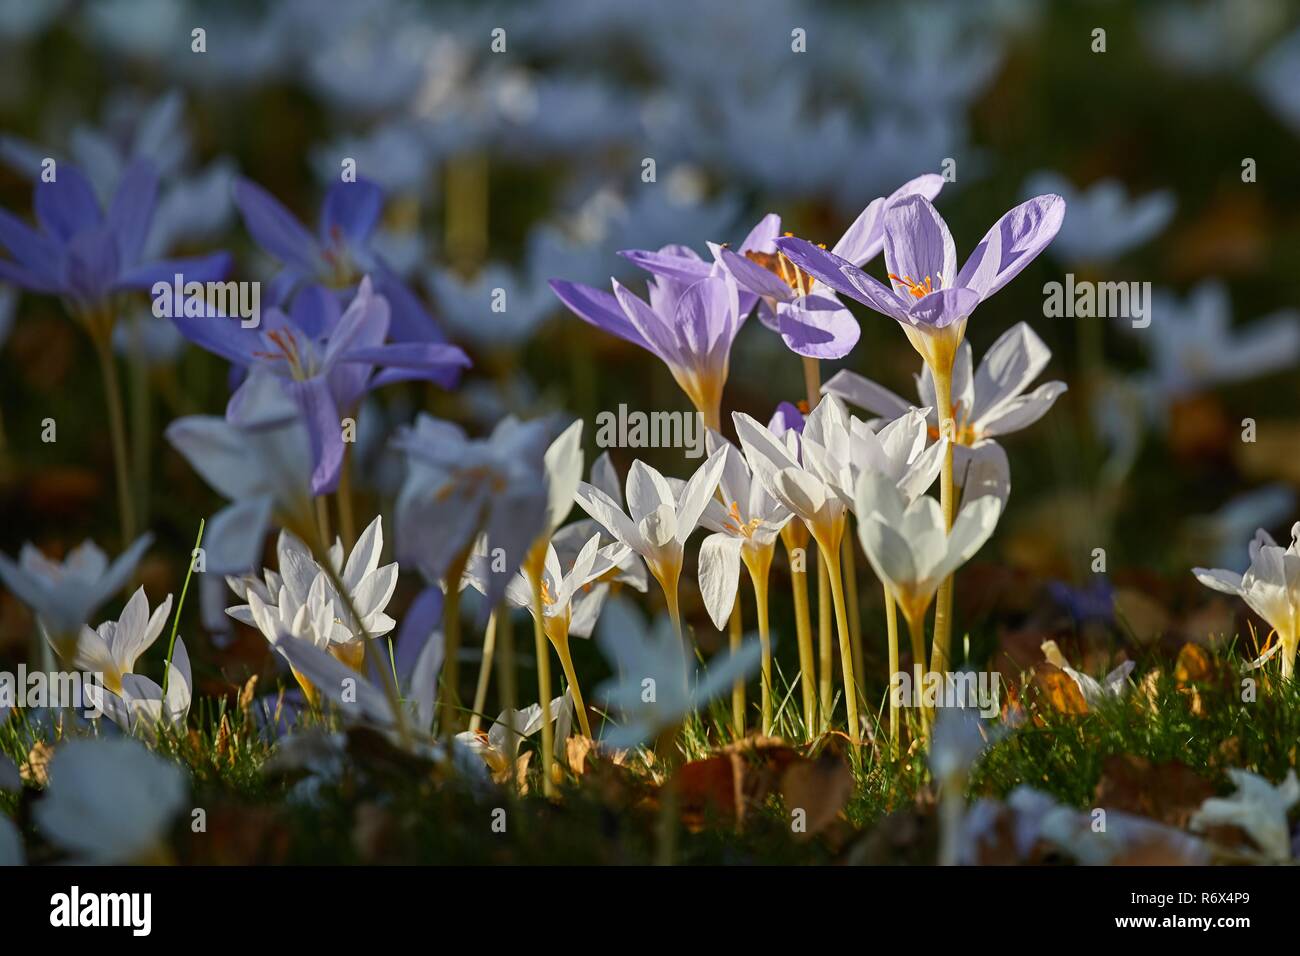 Flowers in breeze Stock Photo